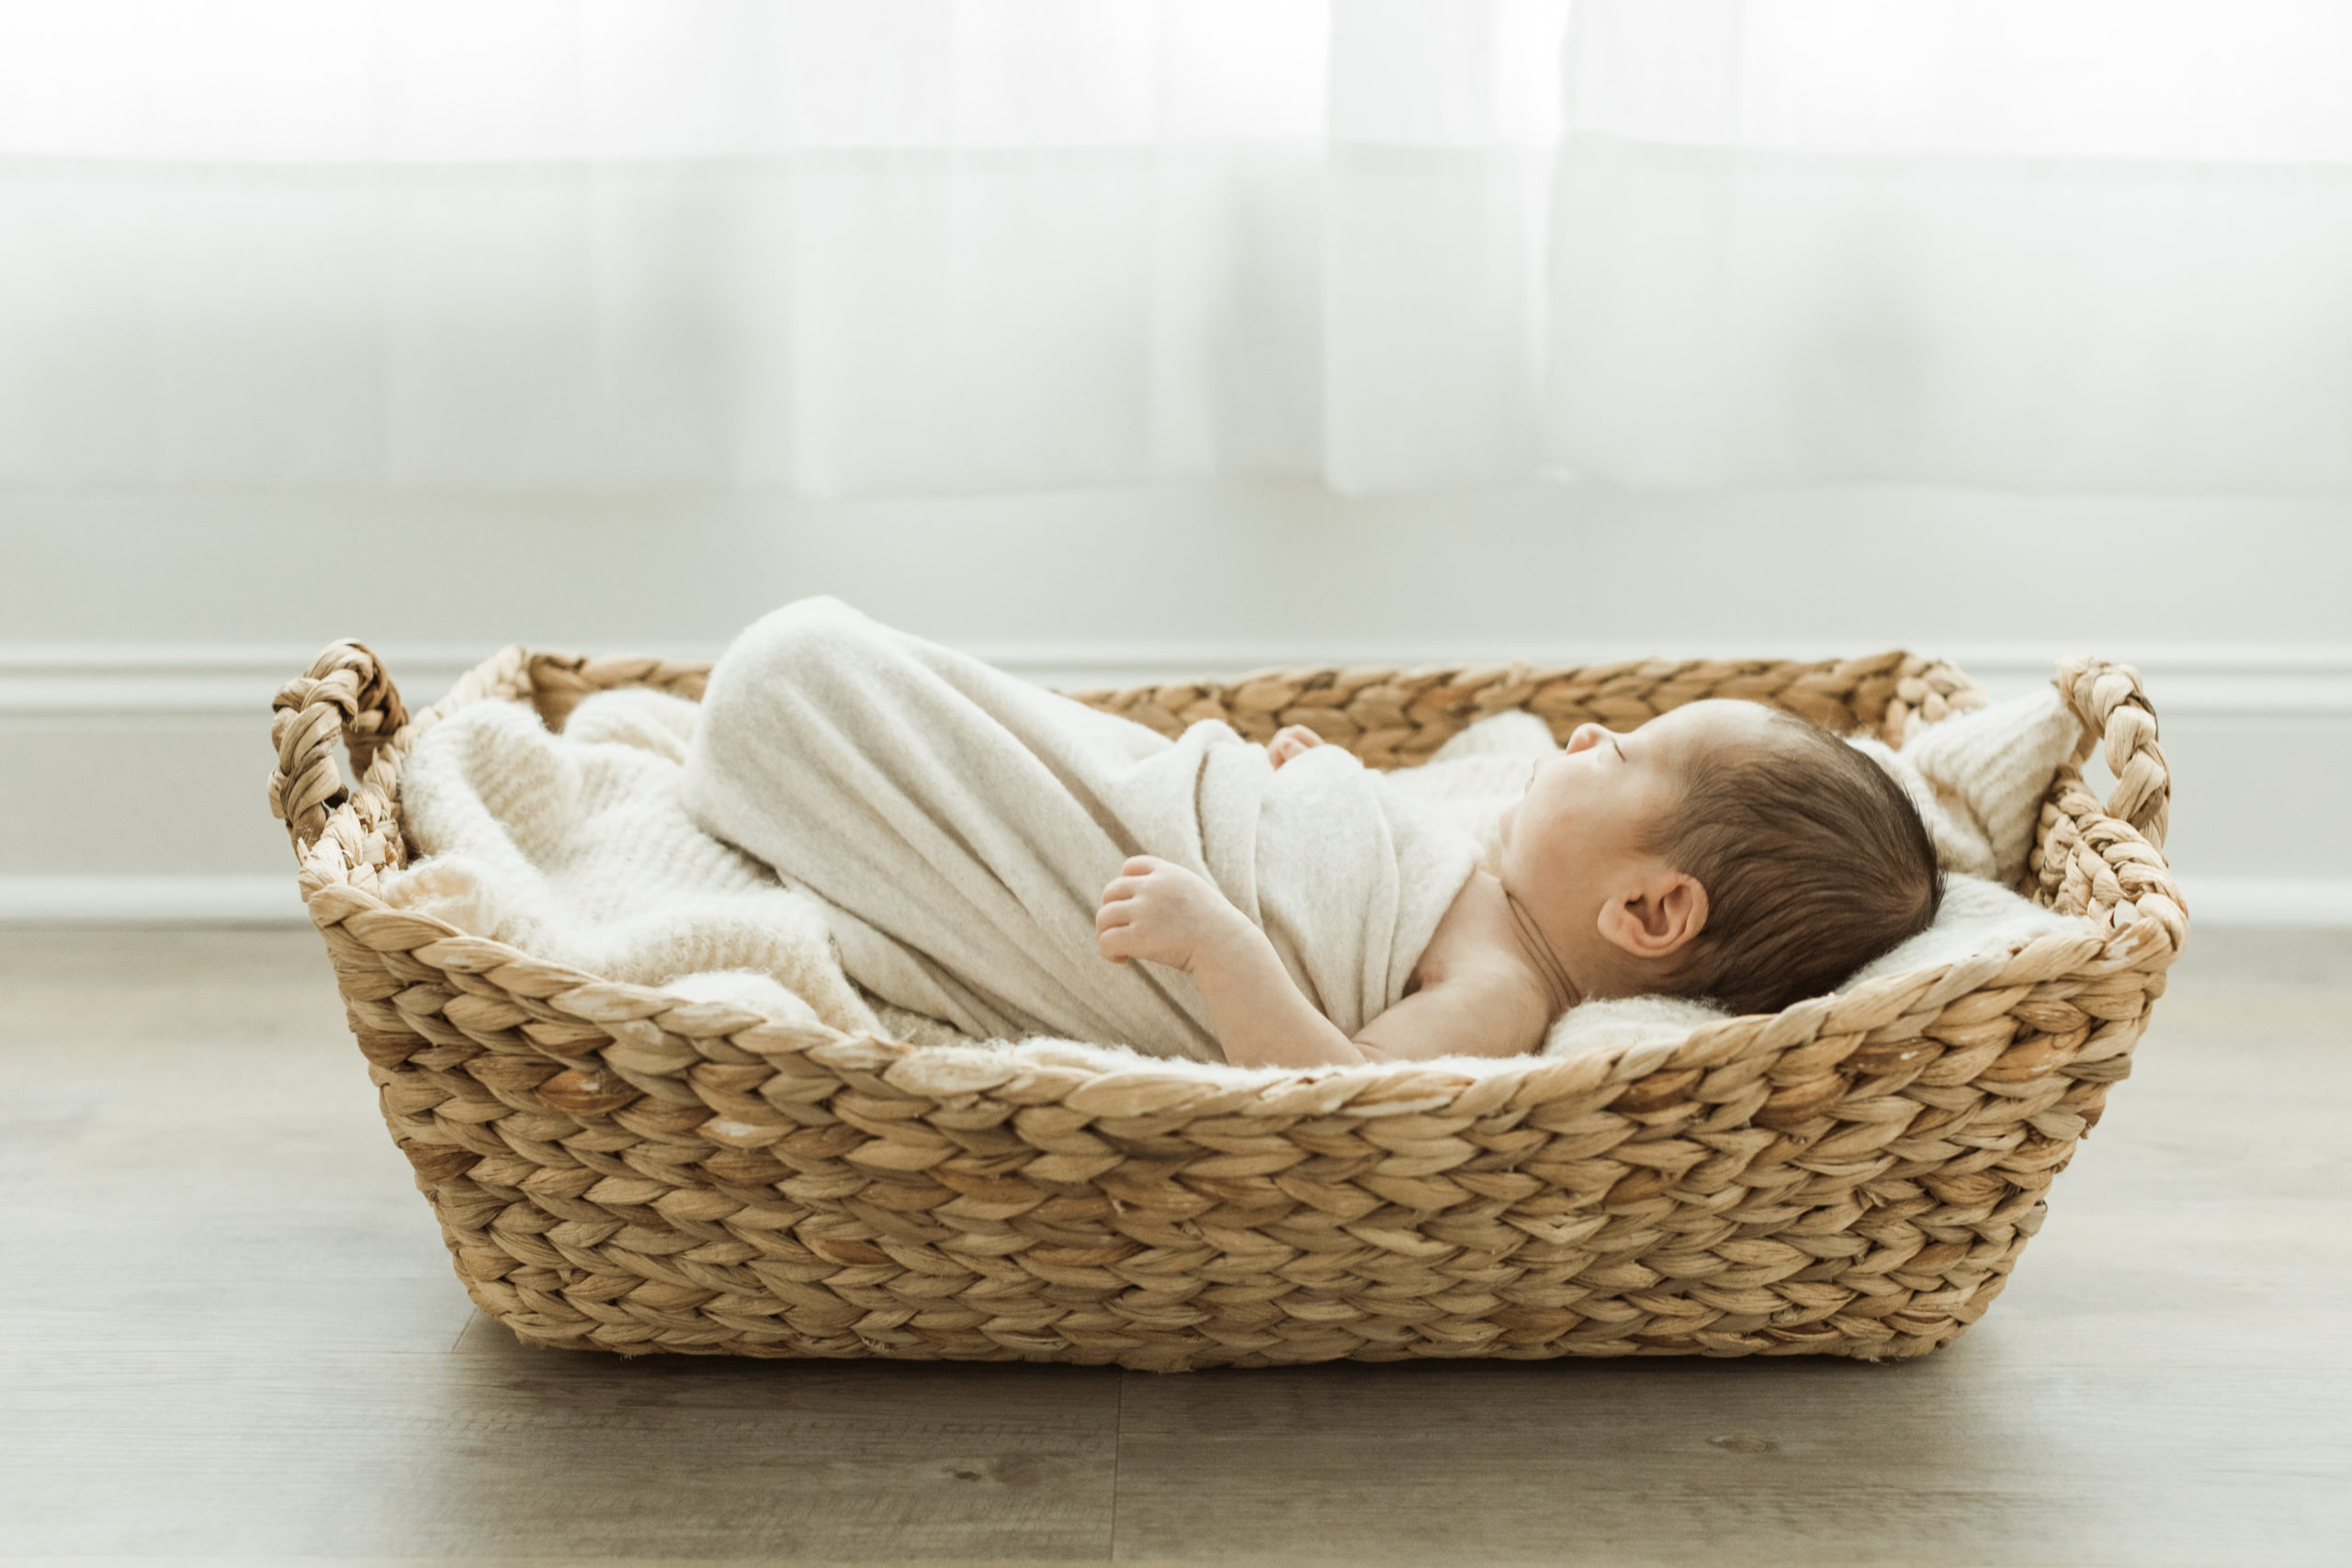 newborn baby boy sleeping in basket. newborn photography